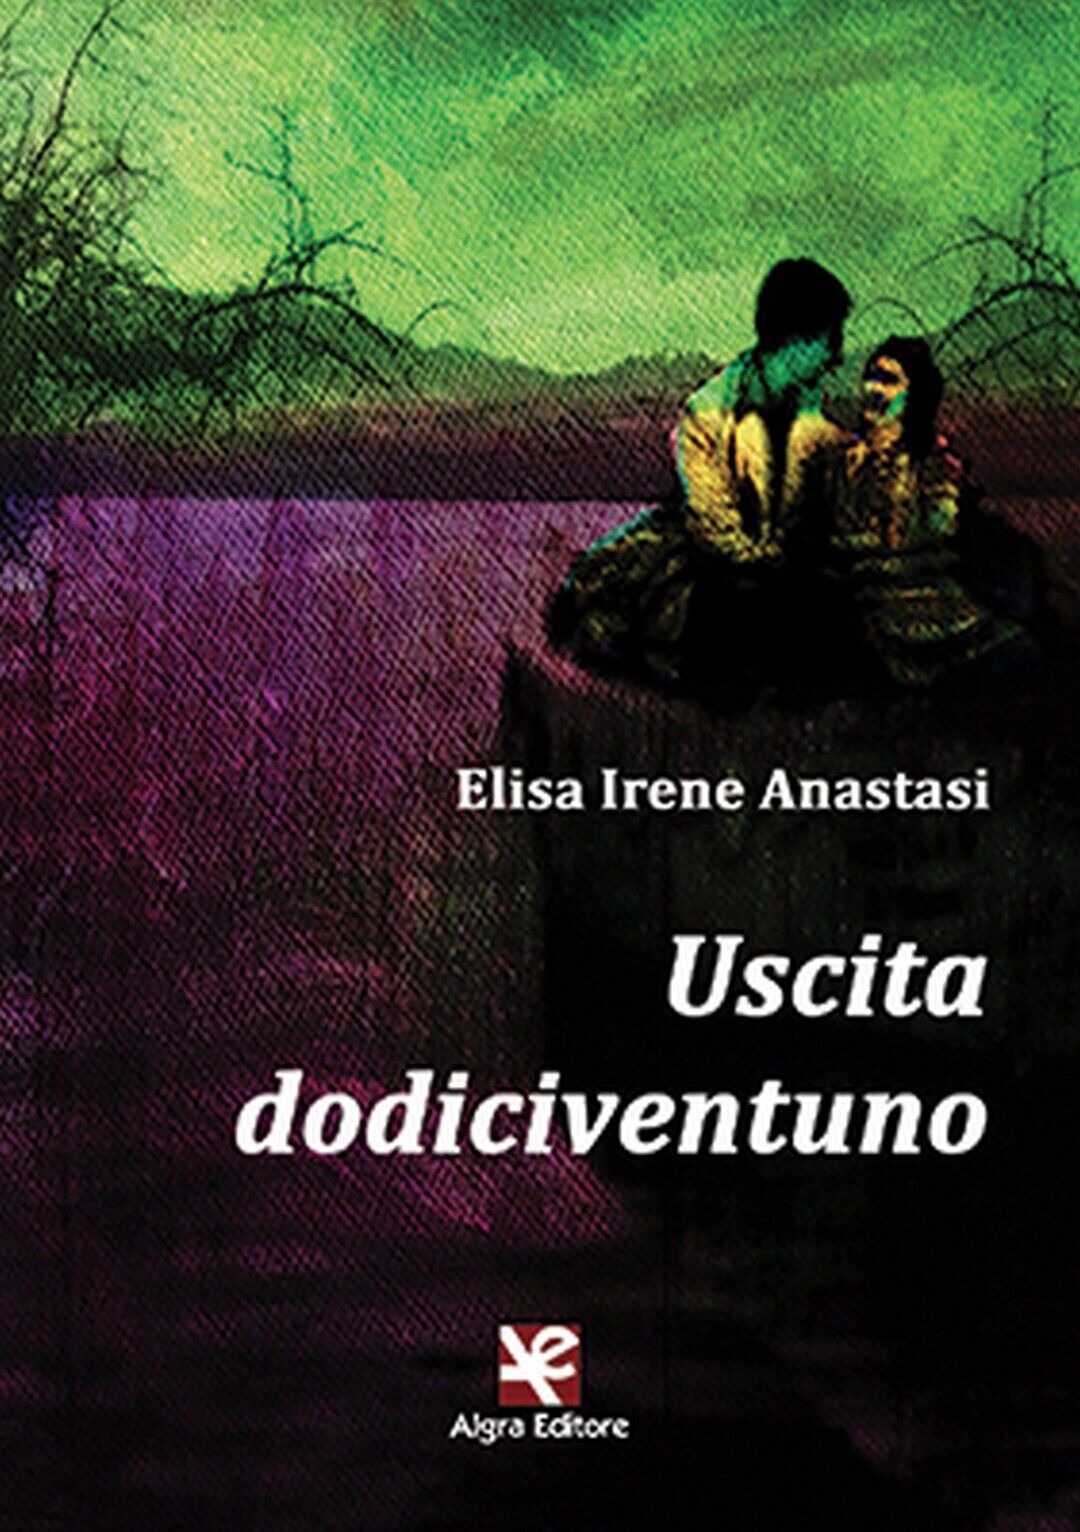 Uscita dodiciventuno  di Elisa I. Anastasi,  Algra Editore